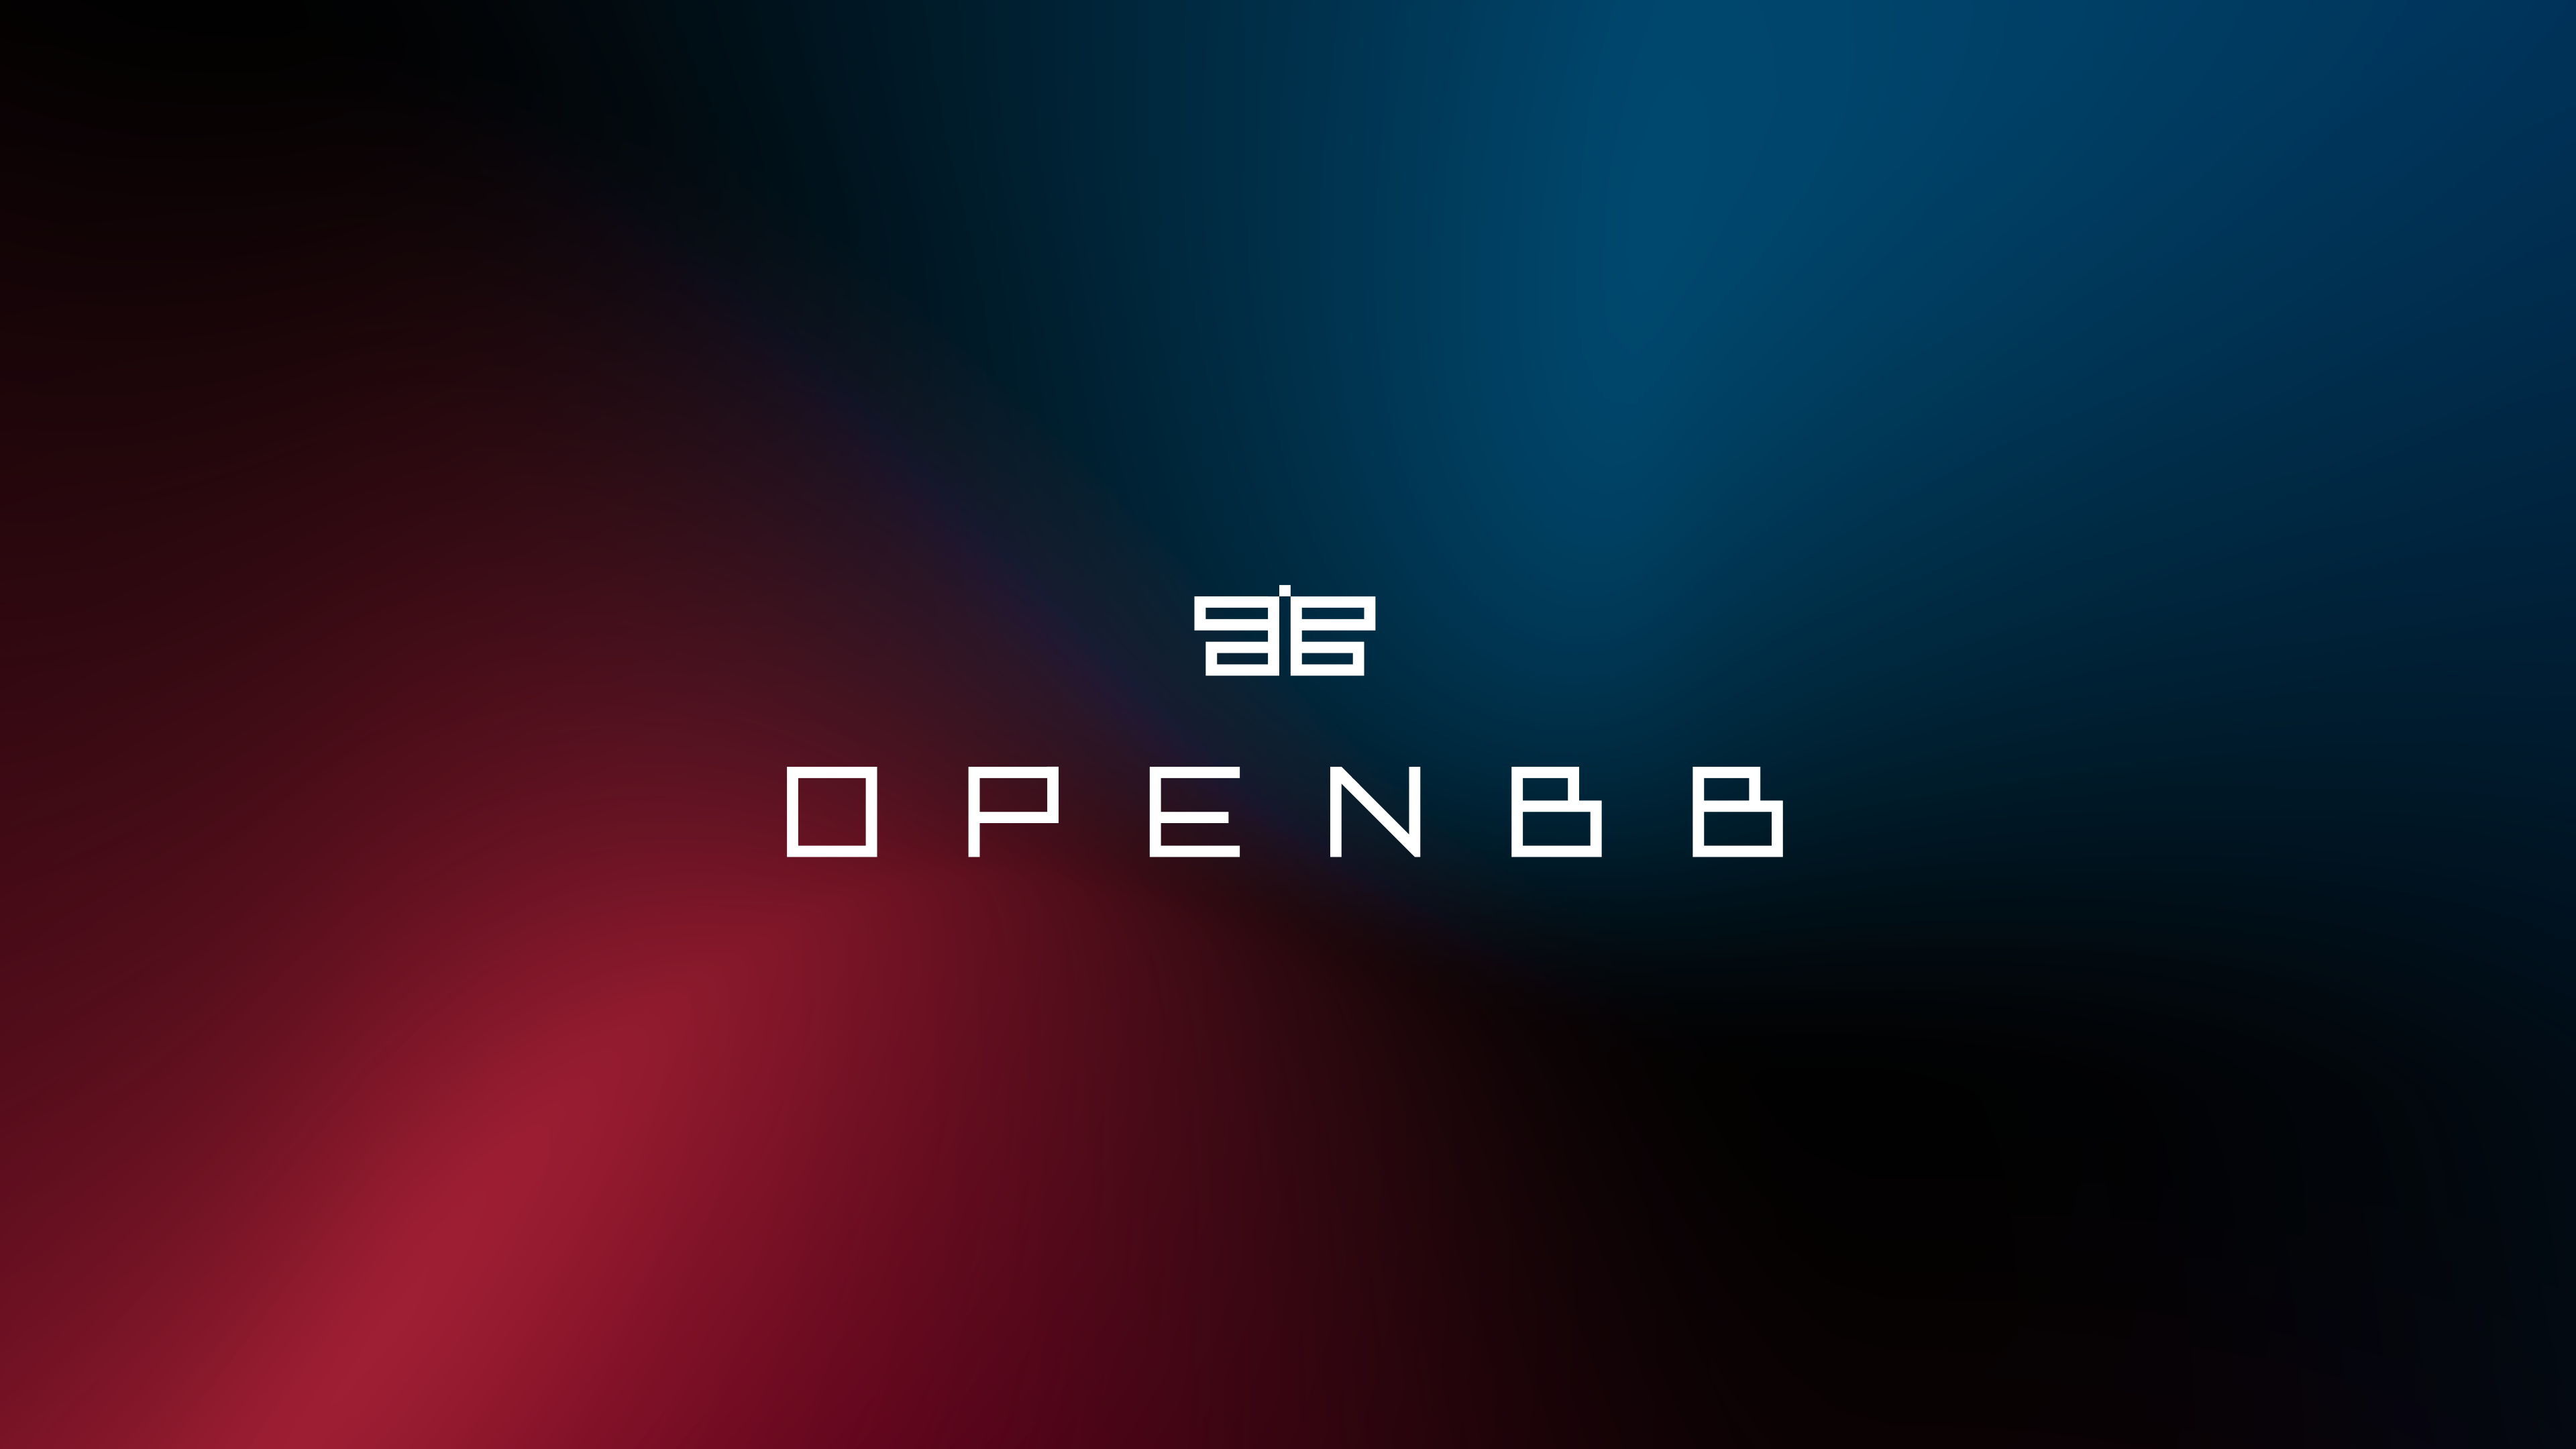 OpenBBTerminal